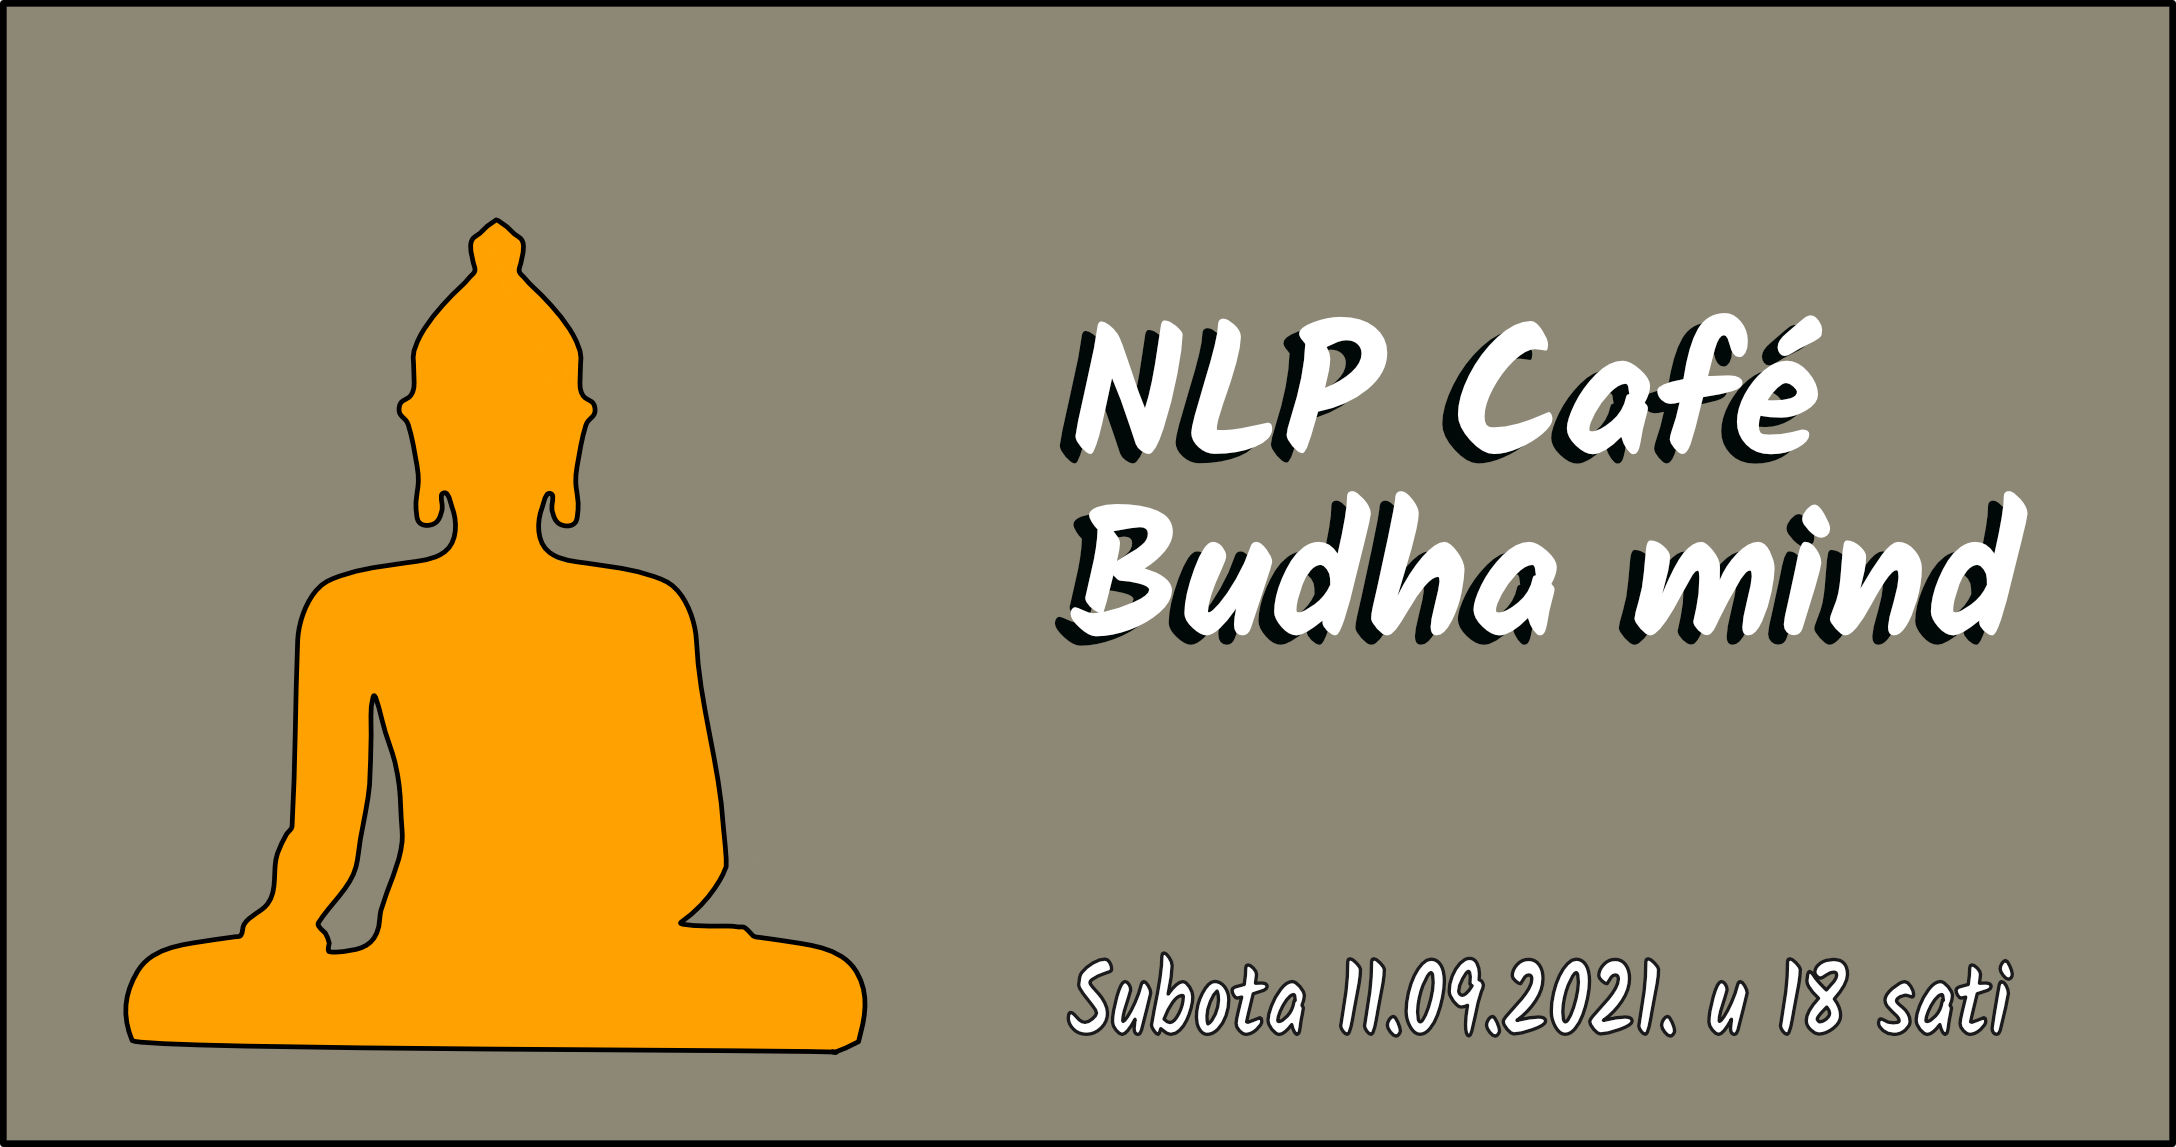 NLP Cafe Budha mind